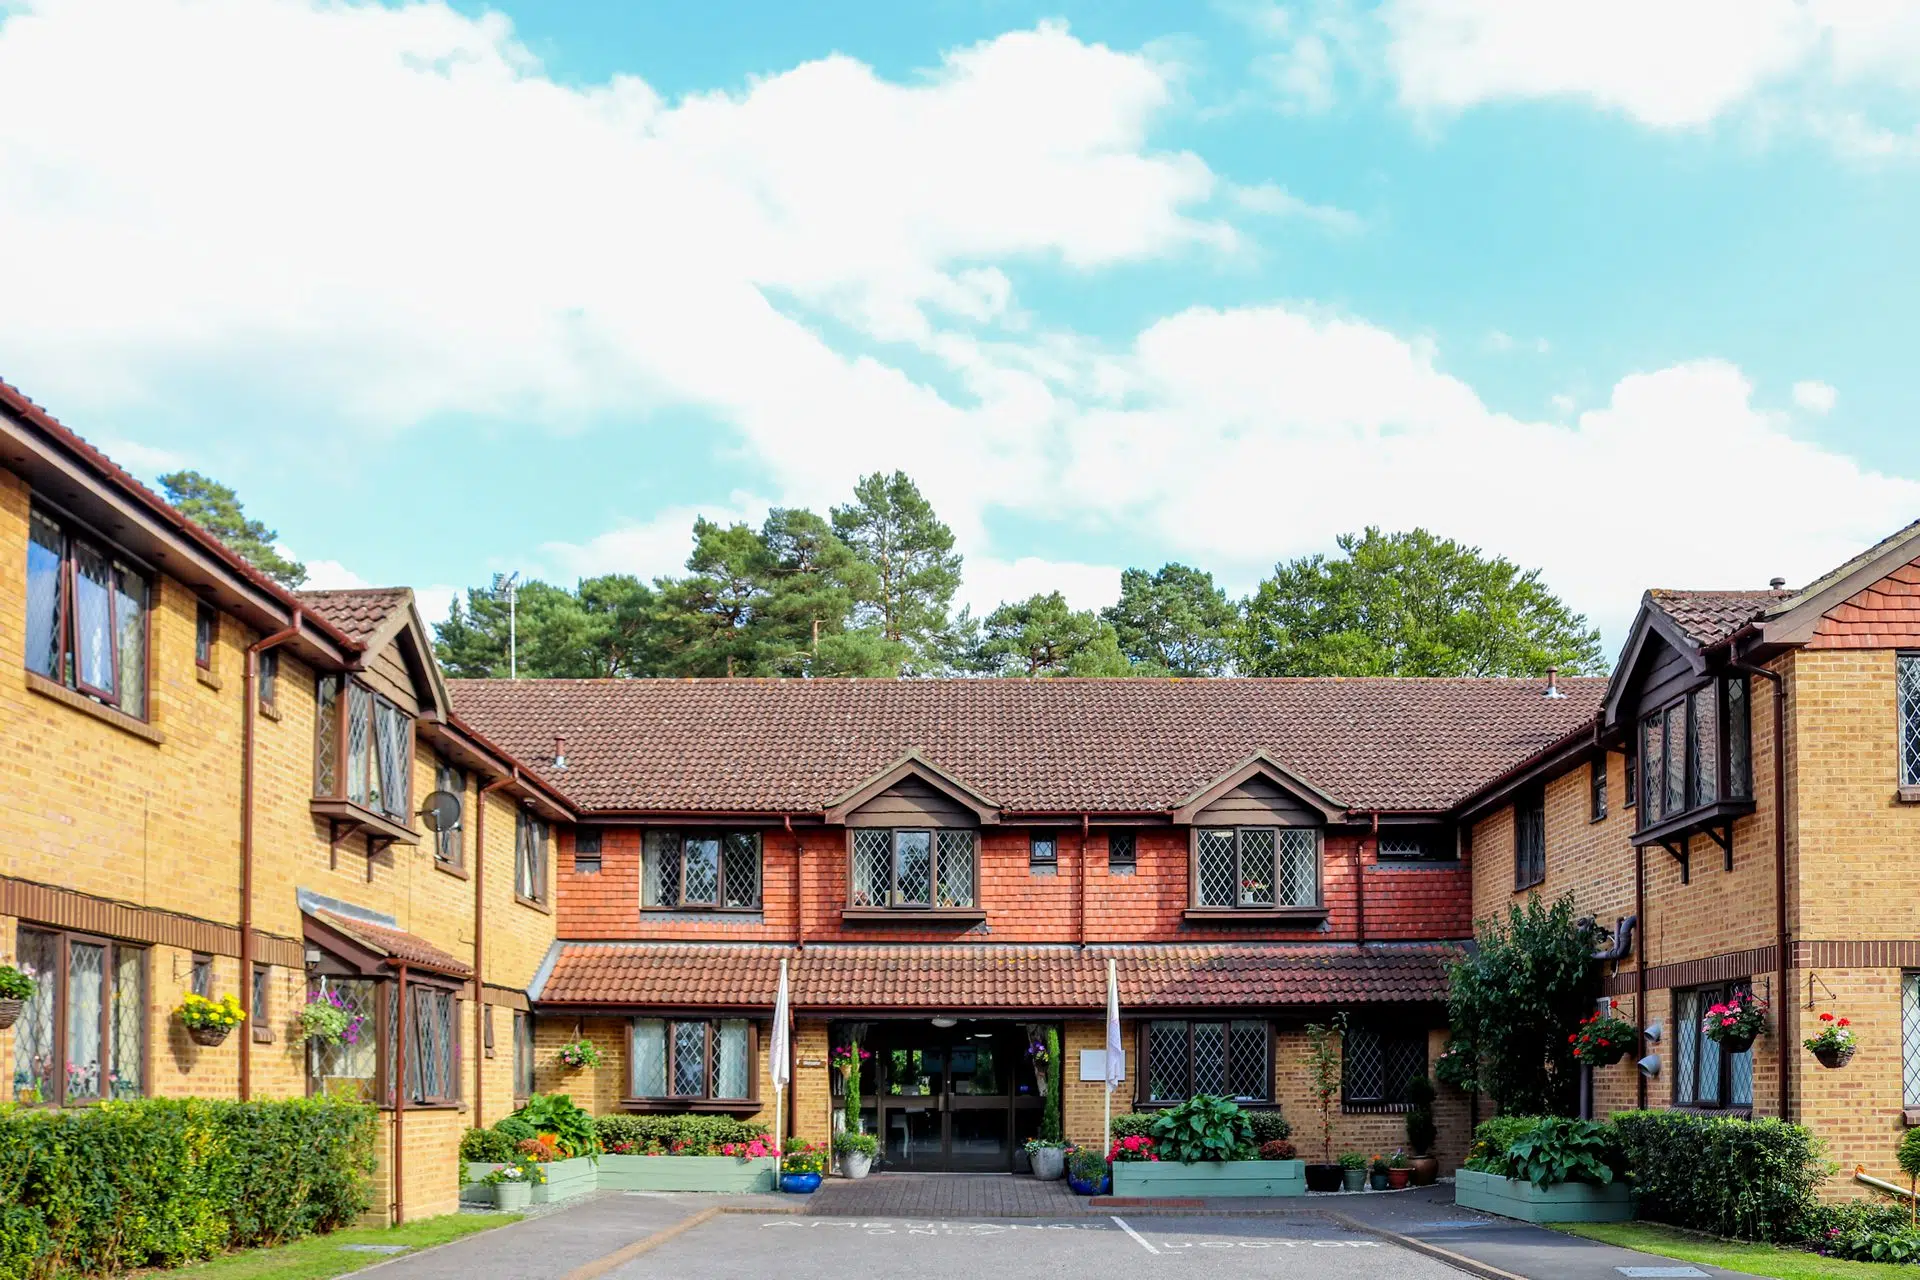 Cedar Lodge care home in Frimley, Surrey